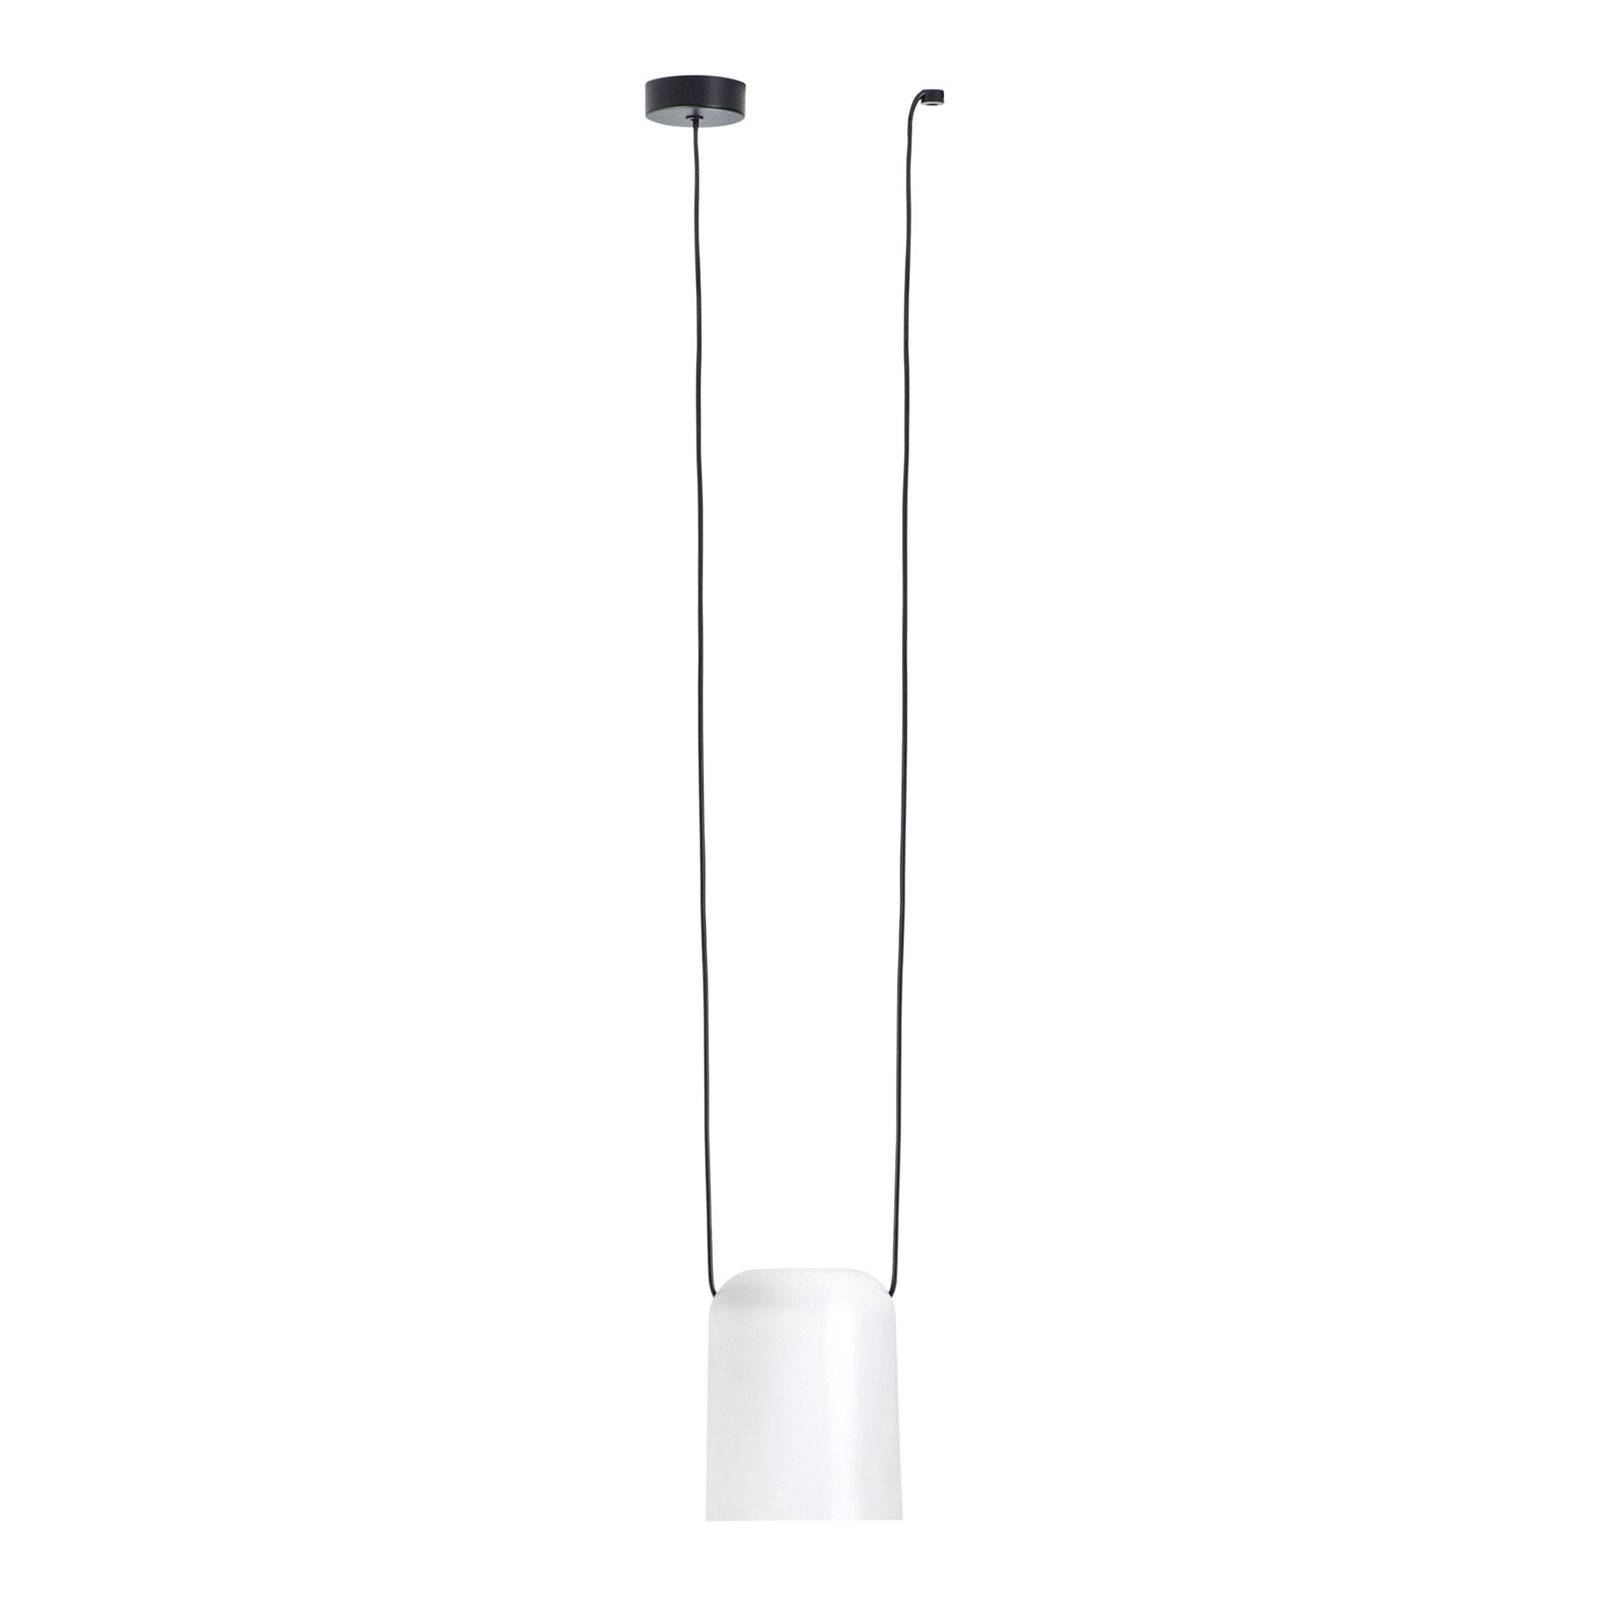 LEDS-C4 Attic Pendellampe Zylinder Ø 15cm weiß